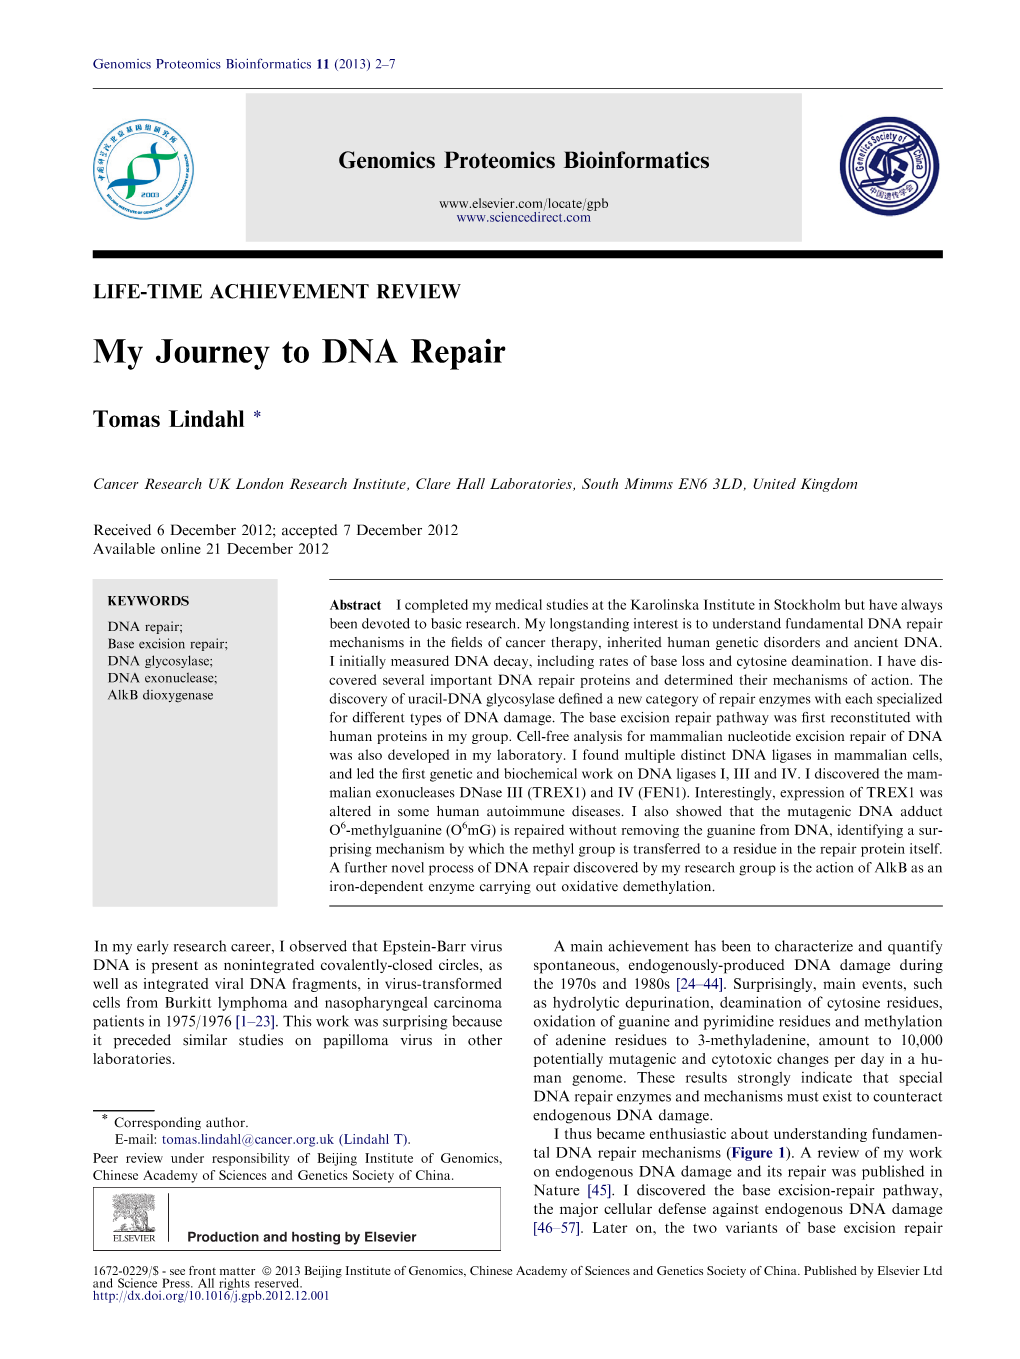 My Journey to DNA Repair